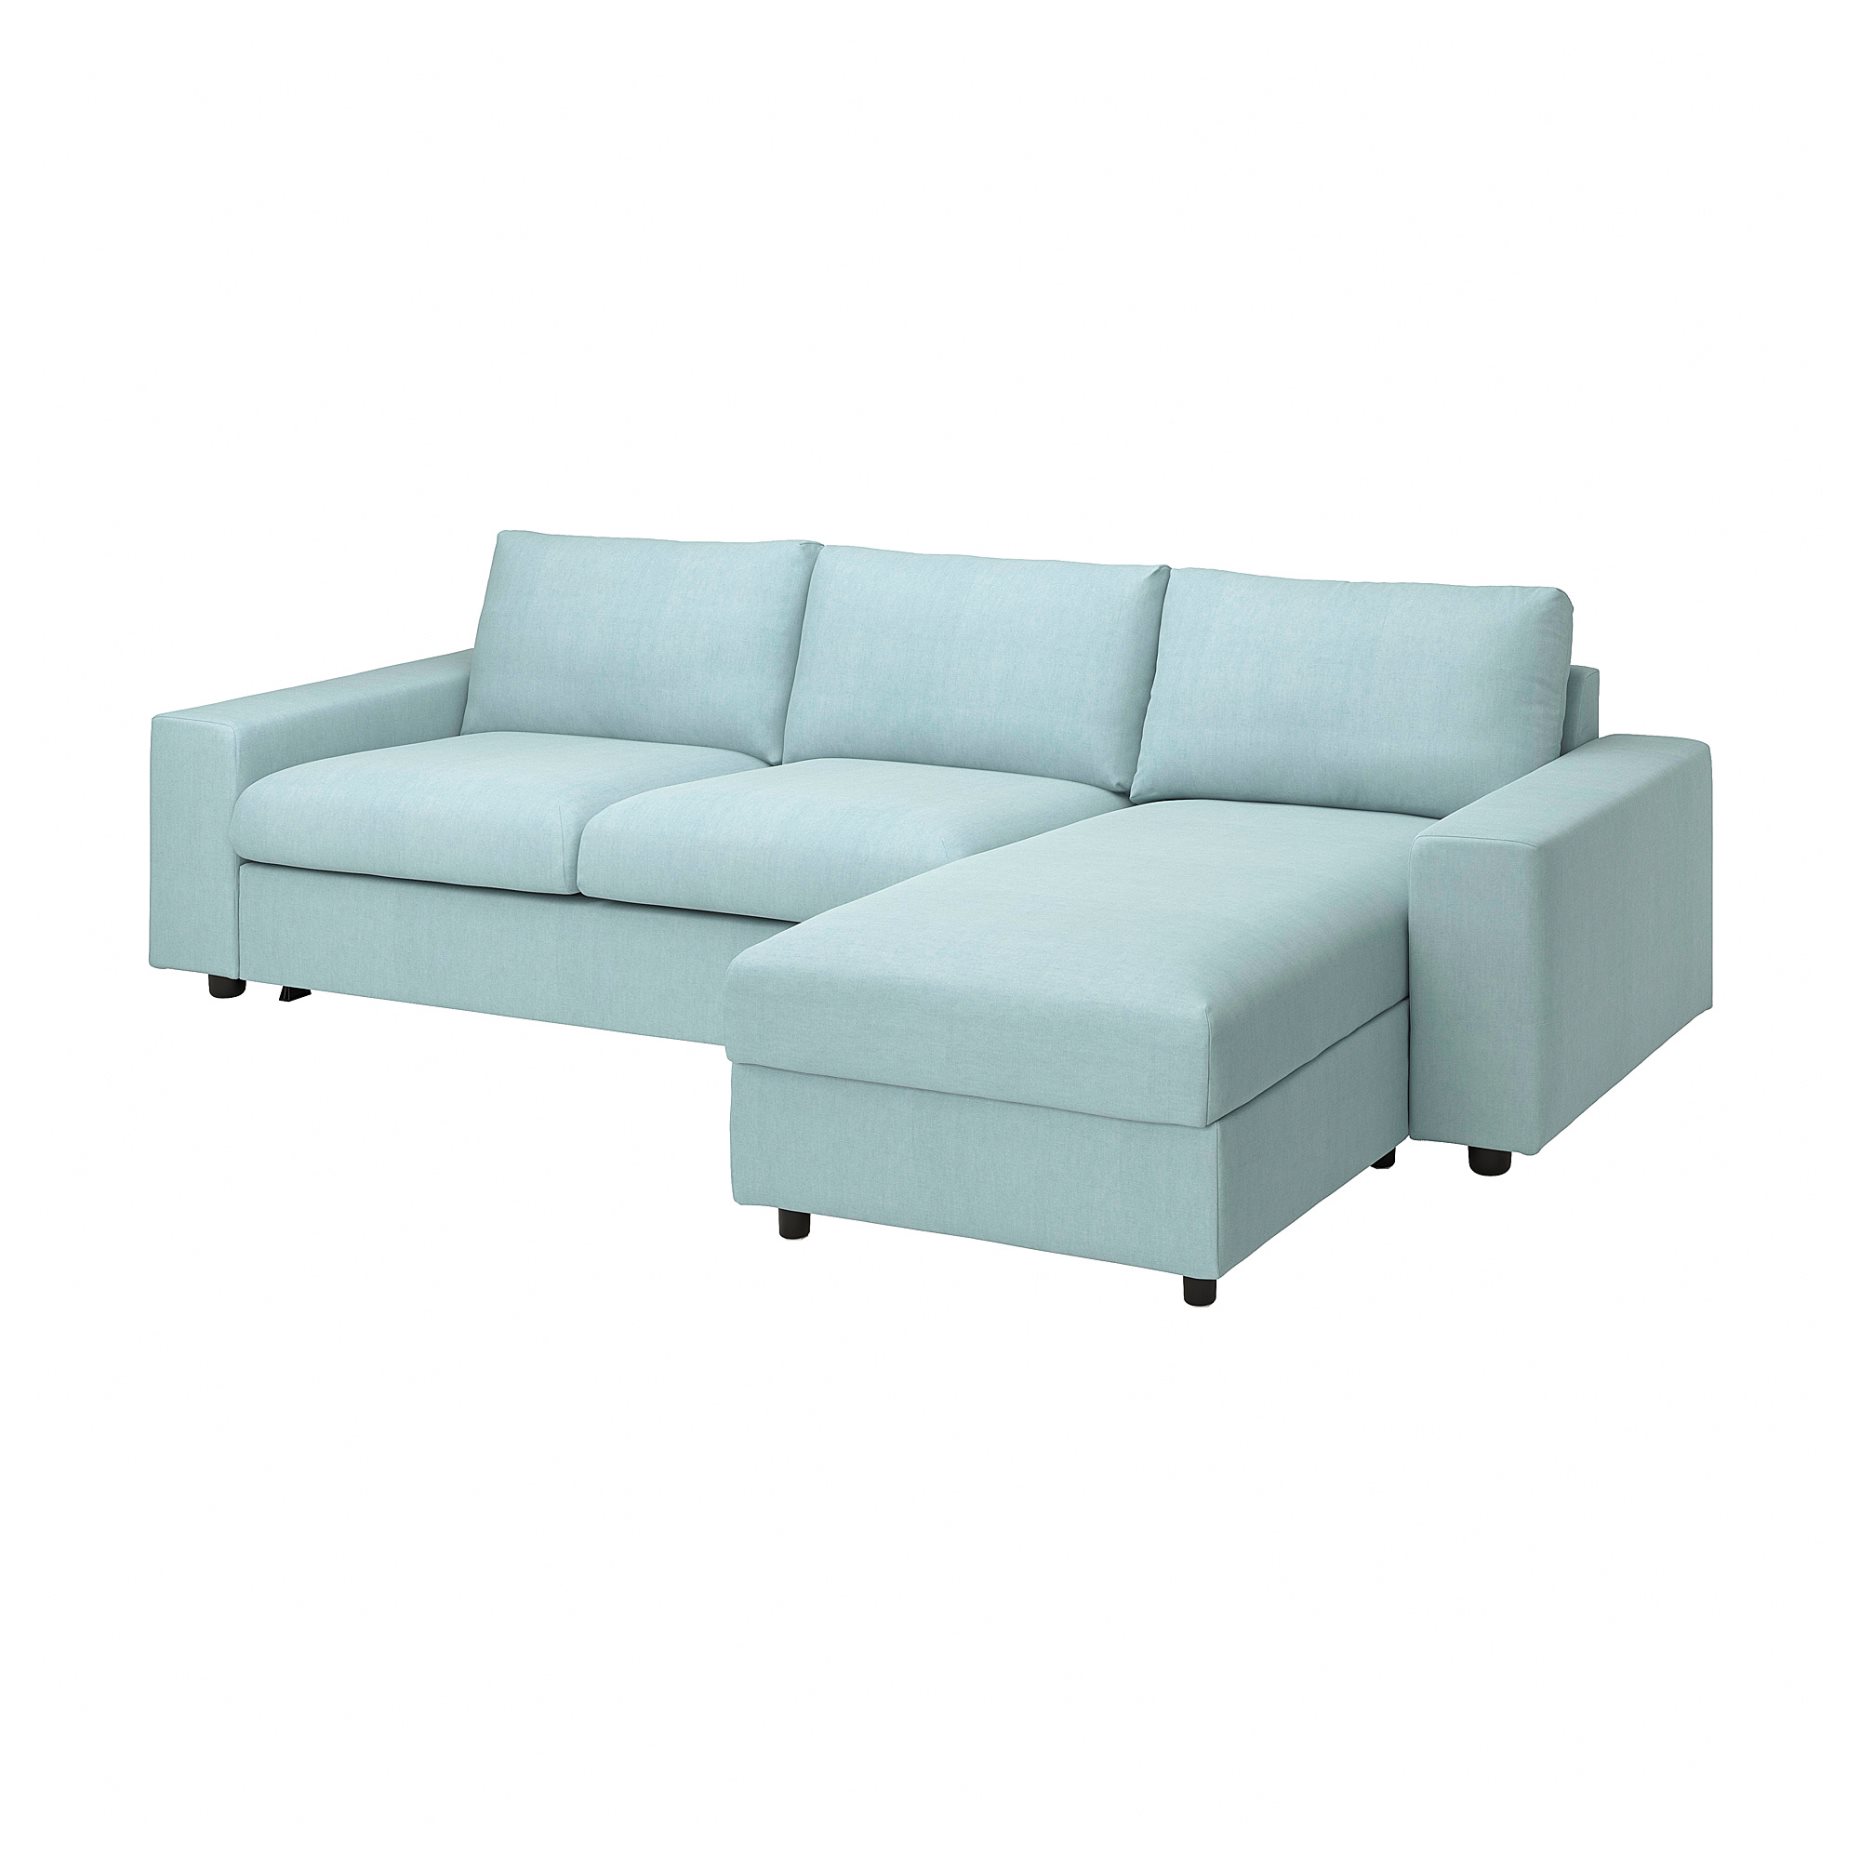 VIMLE, τριθέσιος καναπές-κρεβάτι με πλατιά μπράτσα και σεζλόνγκ, 095.372.28